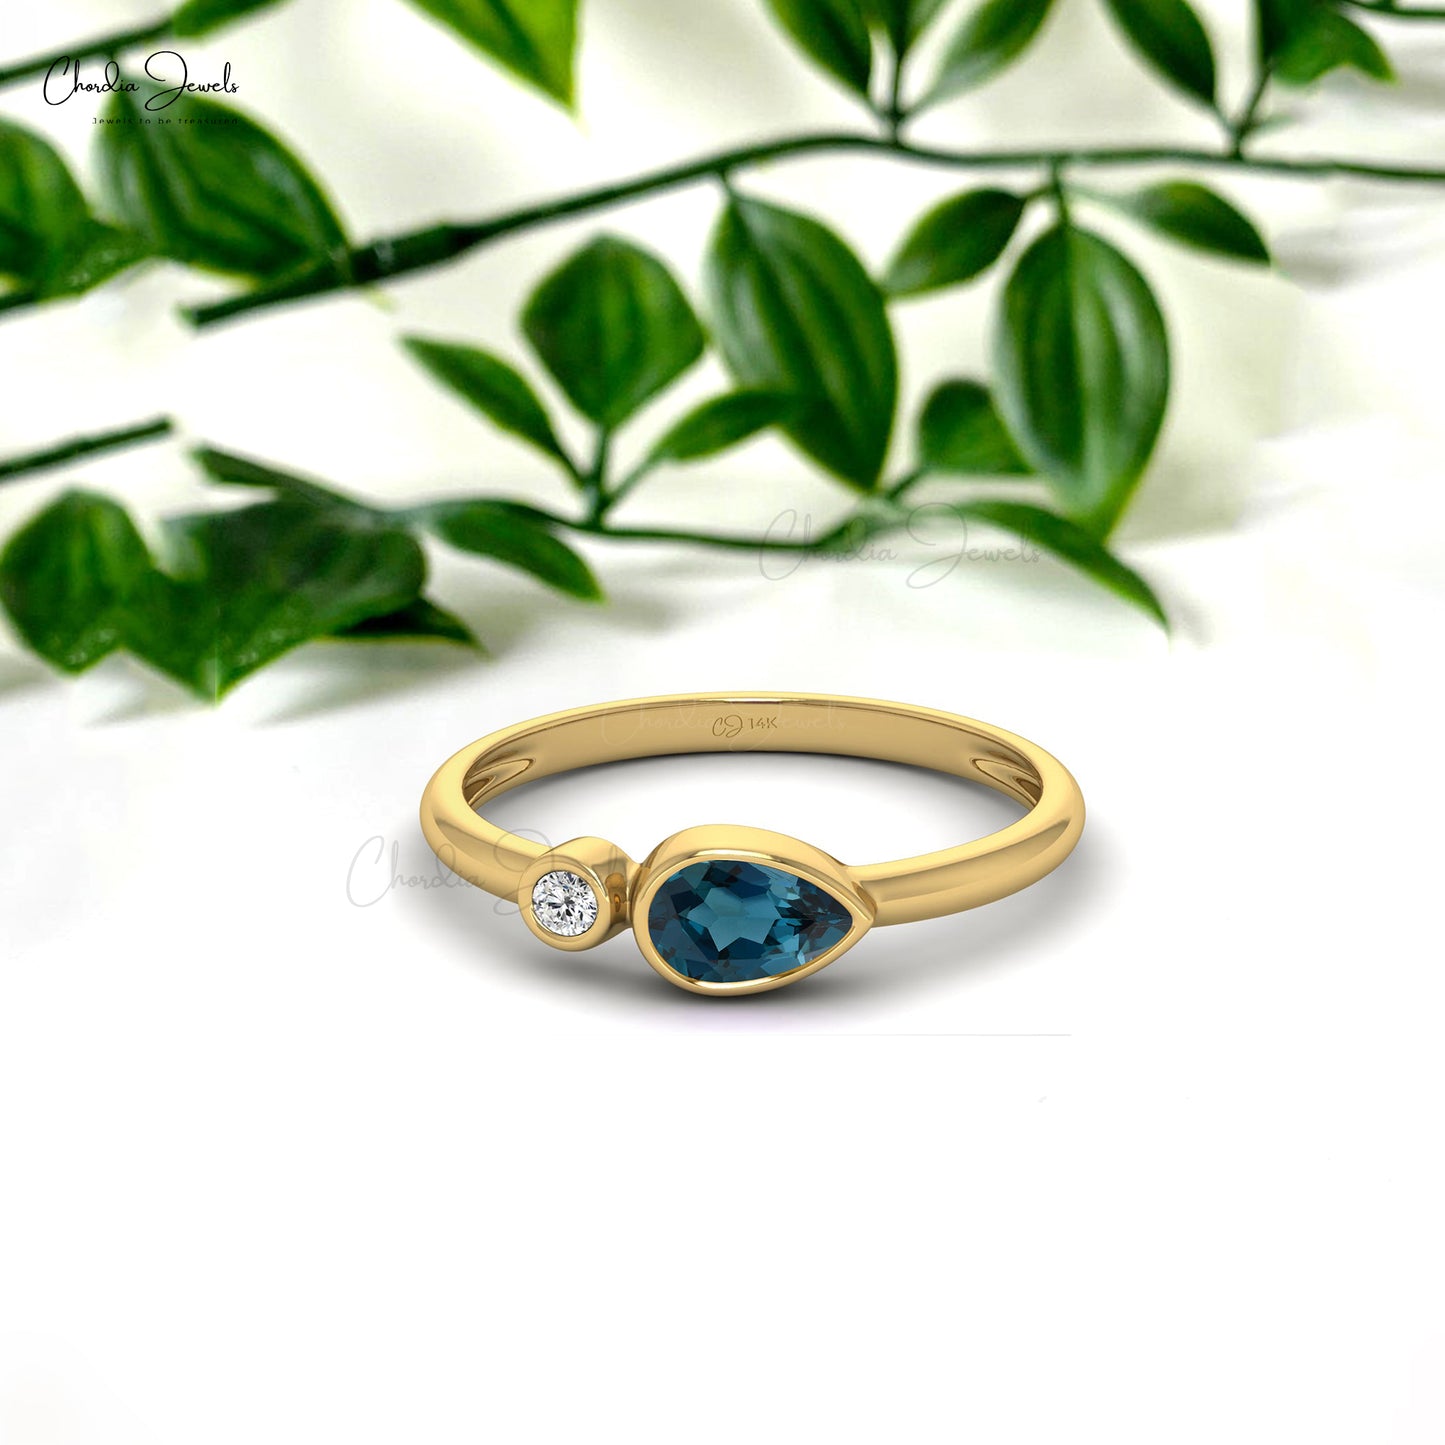 Genuine London Blue Topaz 6x4mm Pear Gemstone Dainty Ring 14k Real Gold White Diamond Promise Ring Hallmarked Jewelry